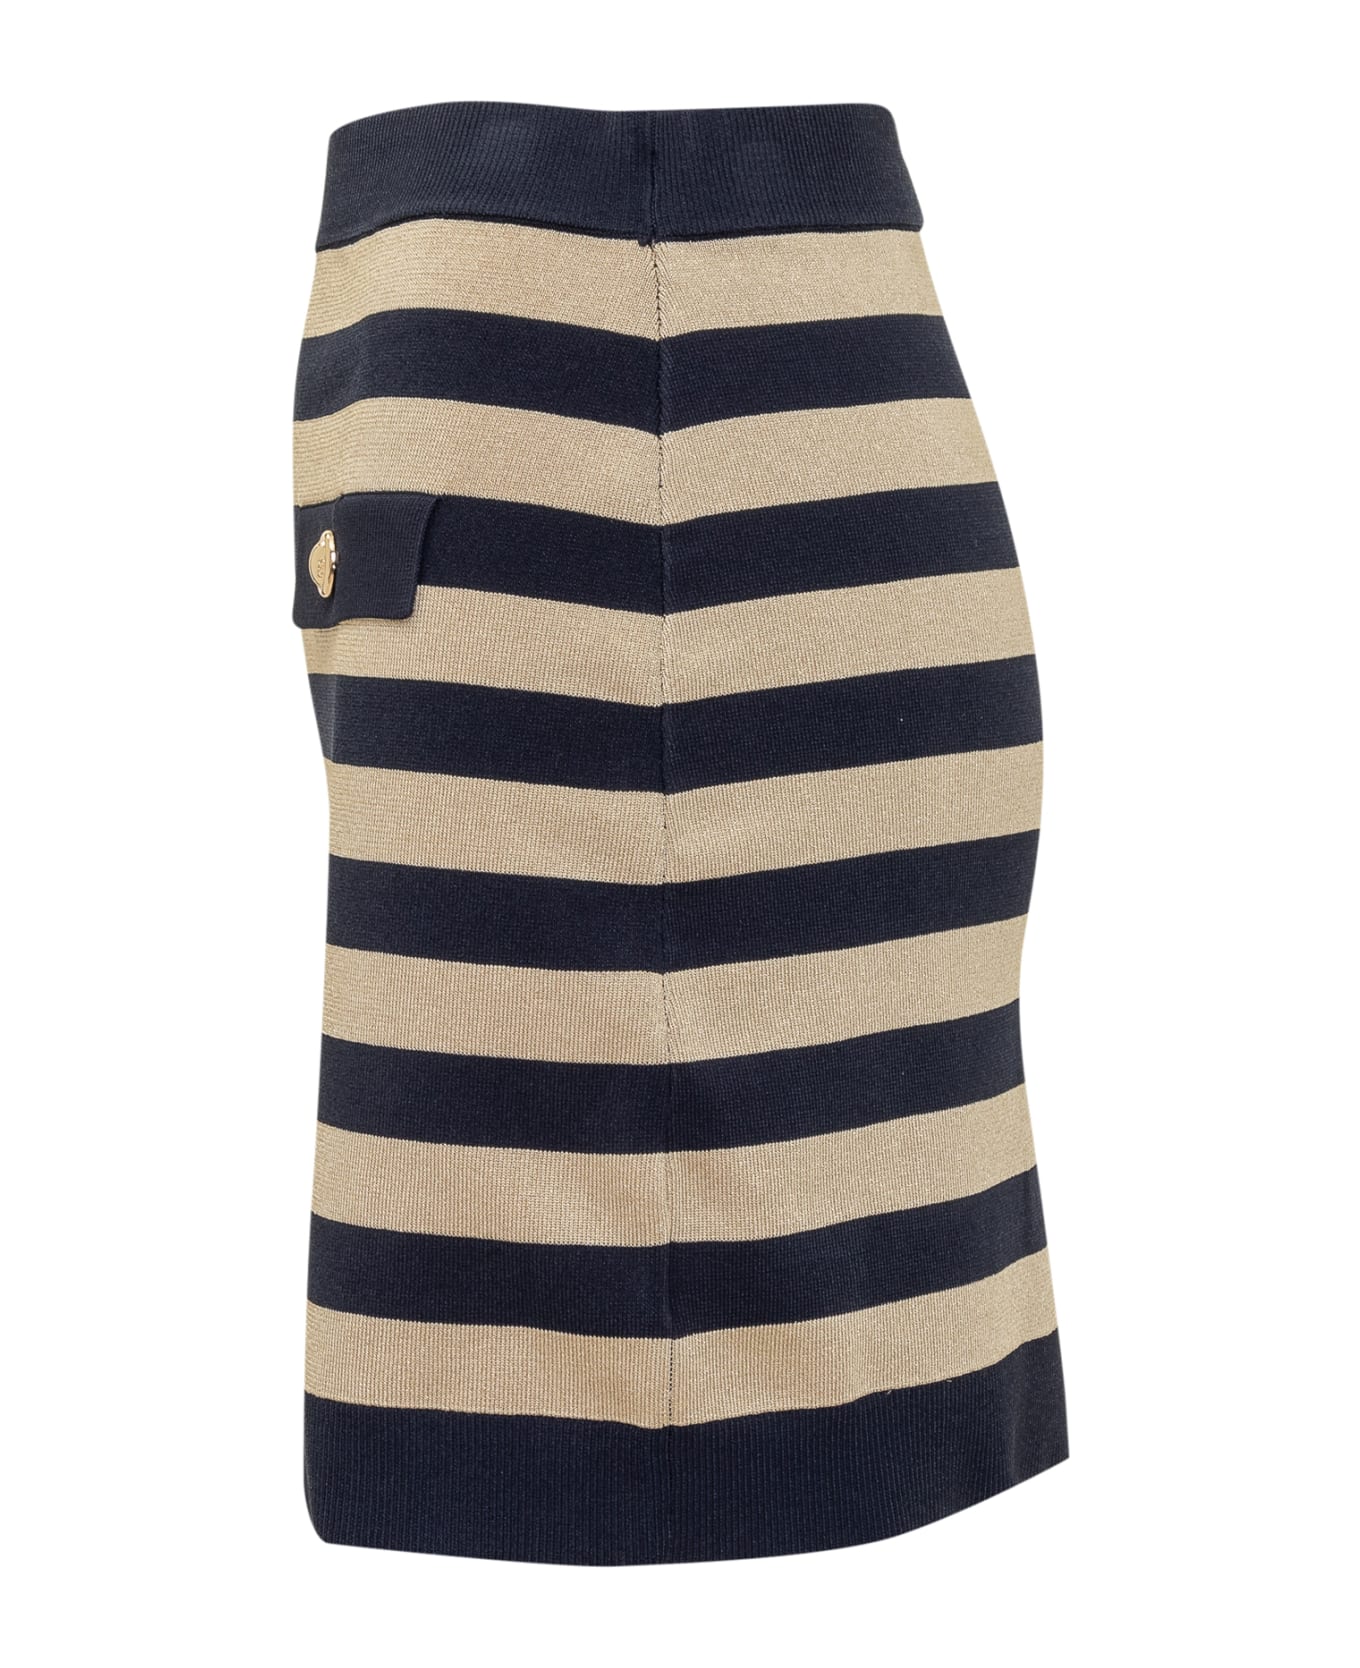 Michael Kors Striped Miniskirt - MIDNIGHT スカート